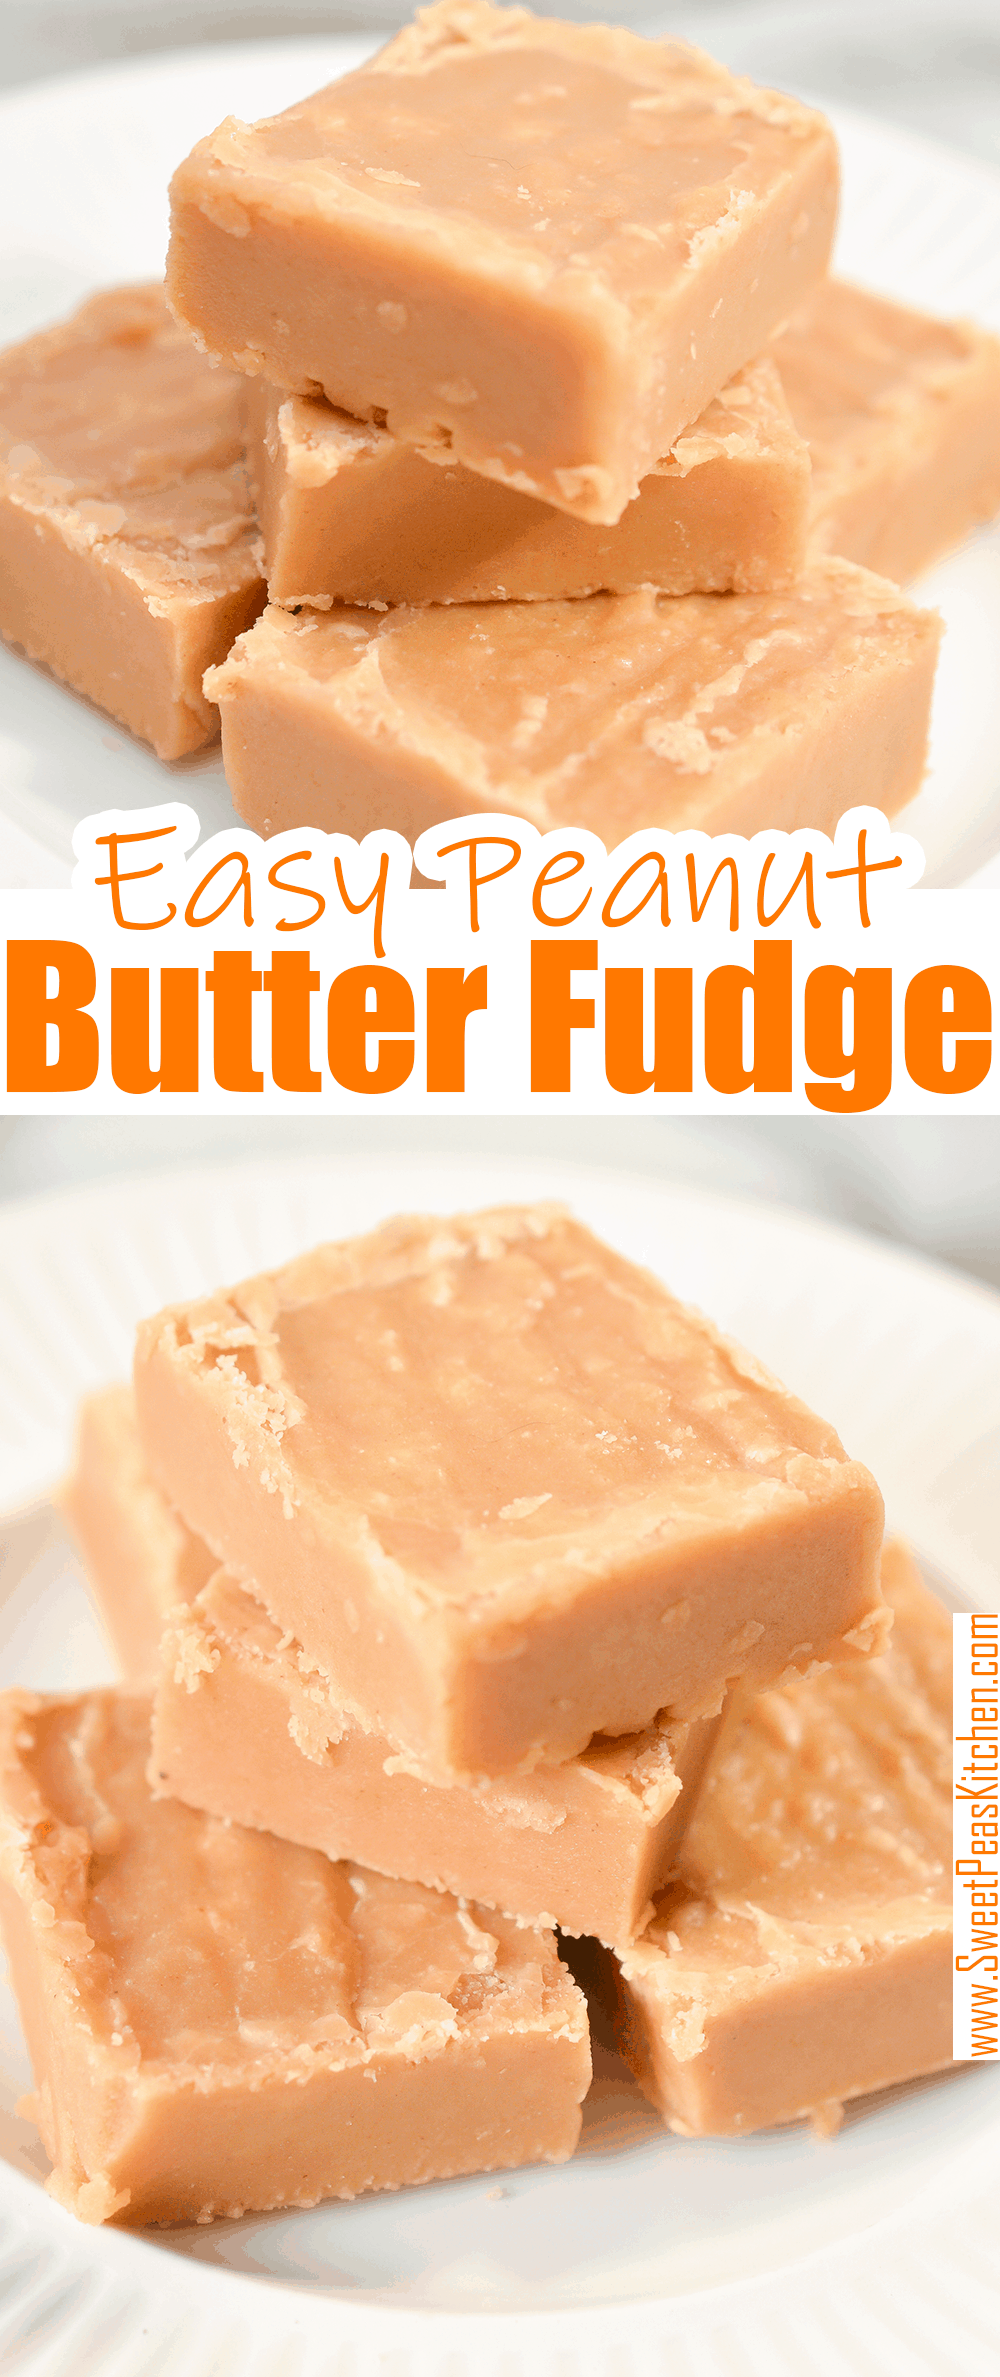 Easy Peanut Butter Fudge